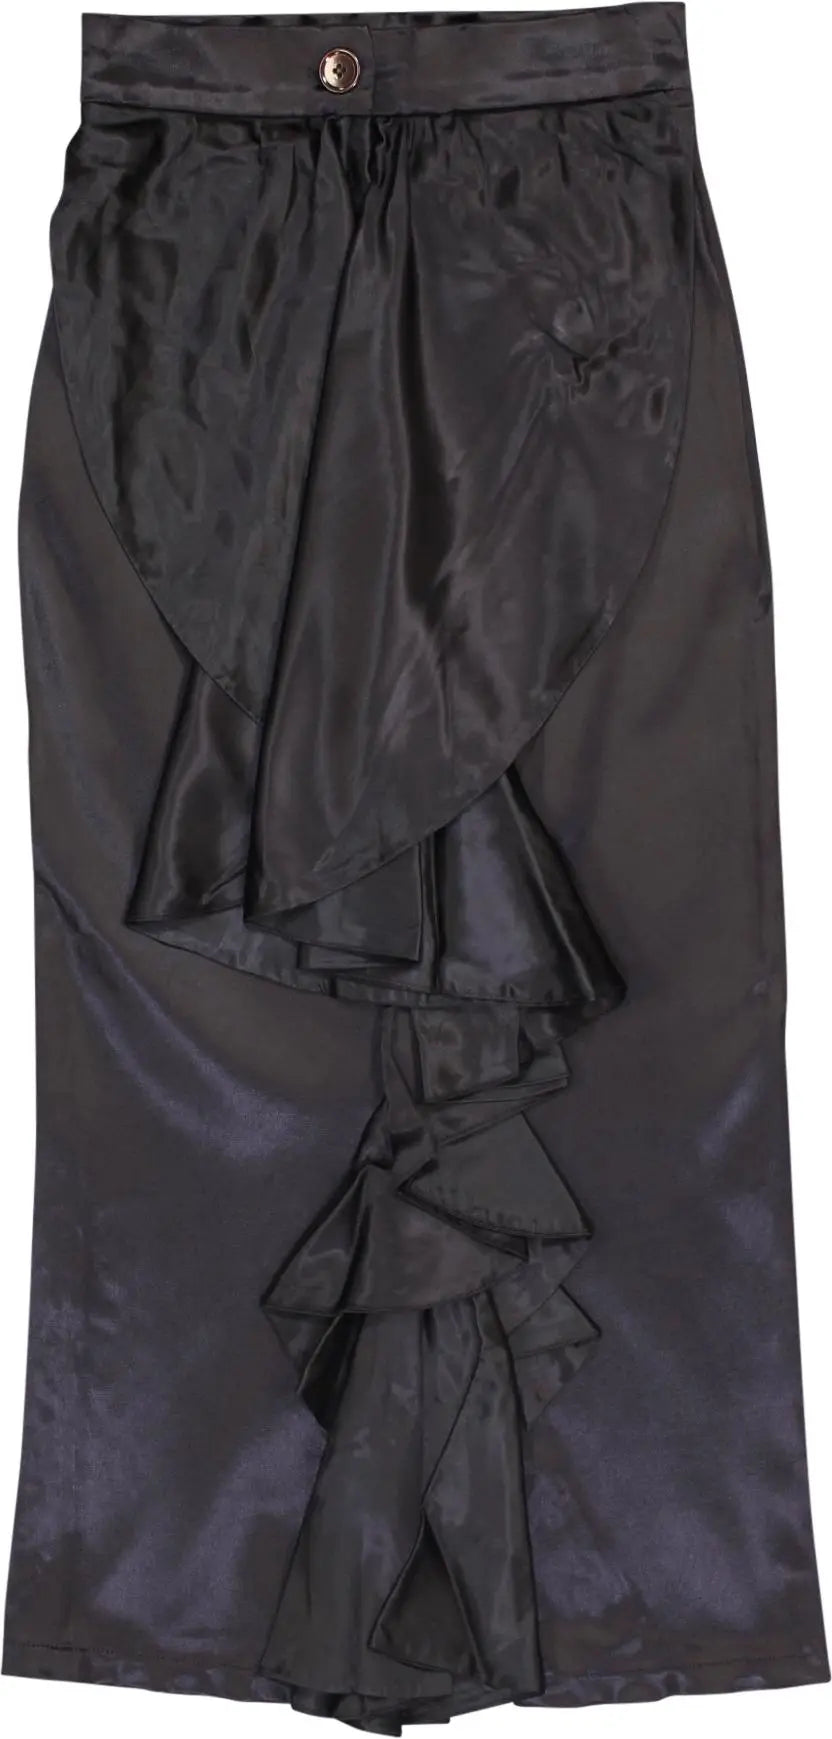 Studibaker Hawk - 90s Black Satin Skirt by Studibaker Hawk- ThriftTale.com - Vintage and second handclothing